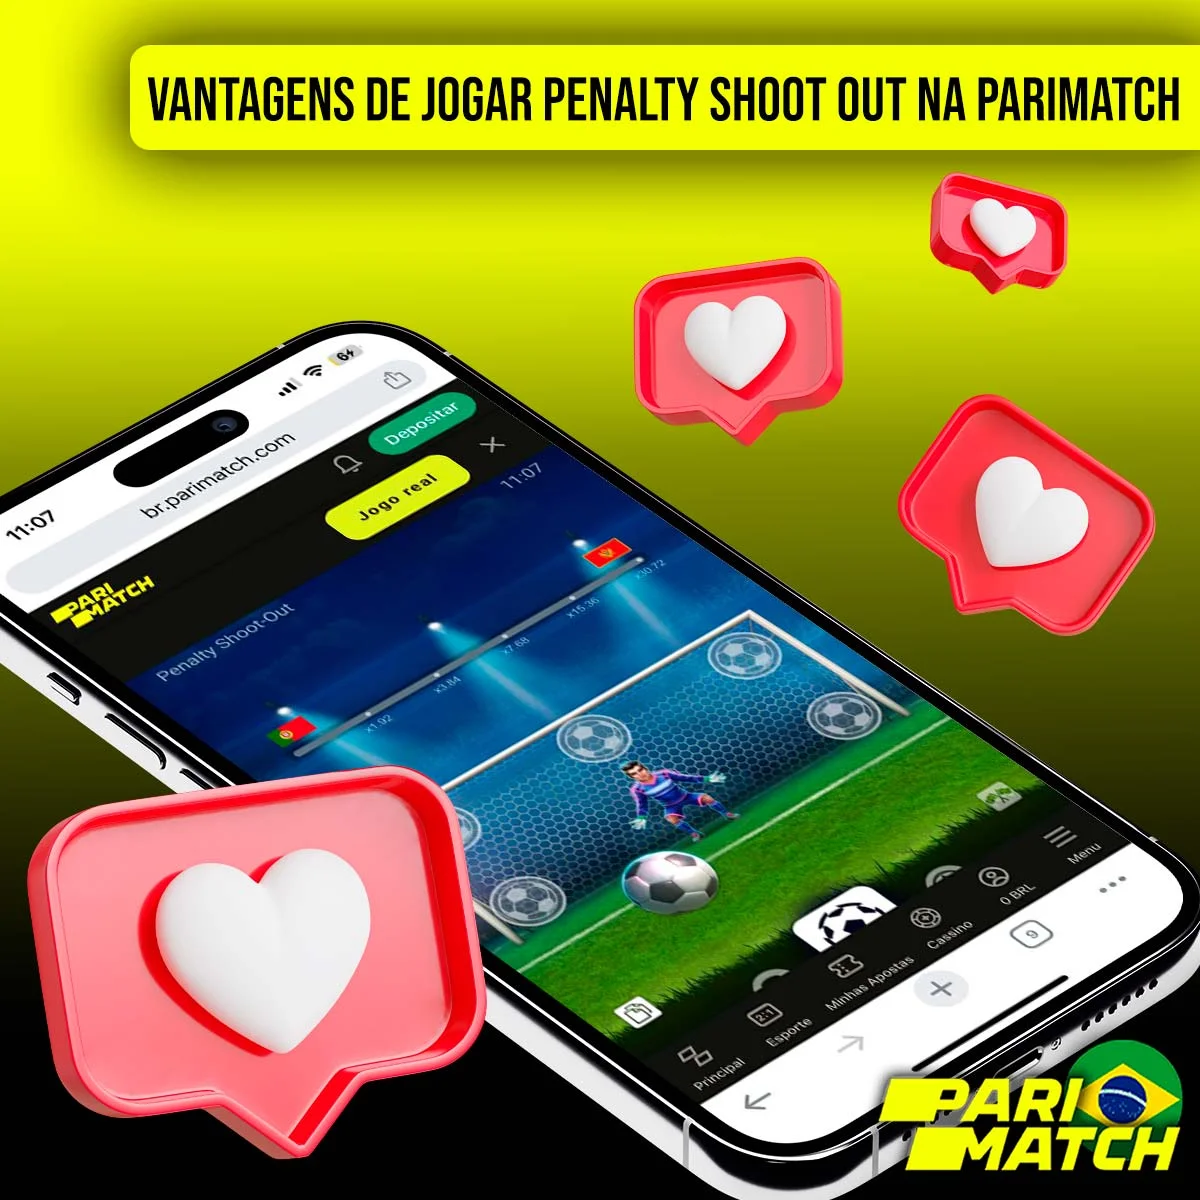 Vantagens de jogar na plataforma Parimatch Penalty Shoot Out